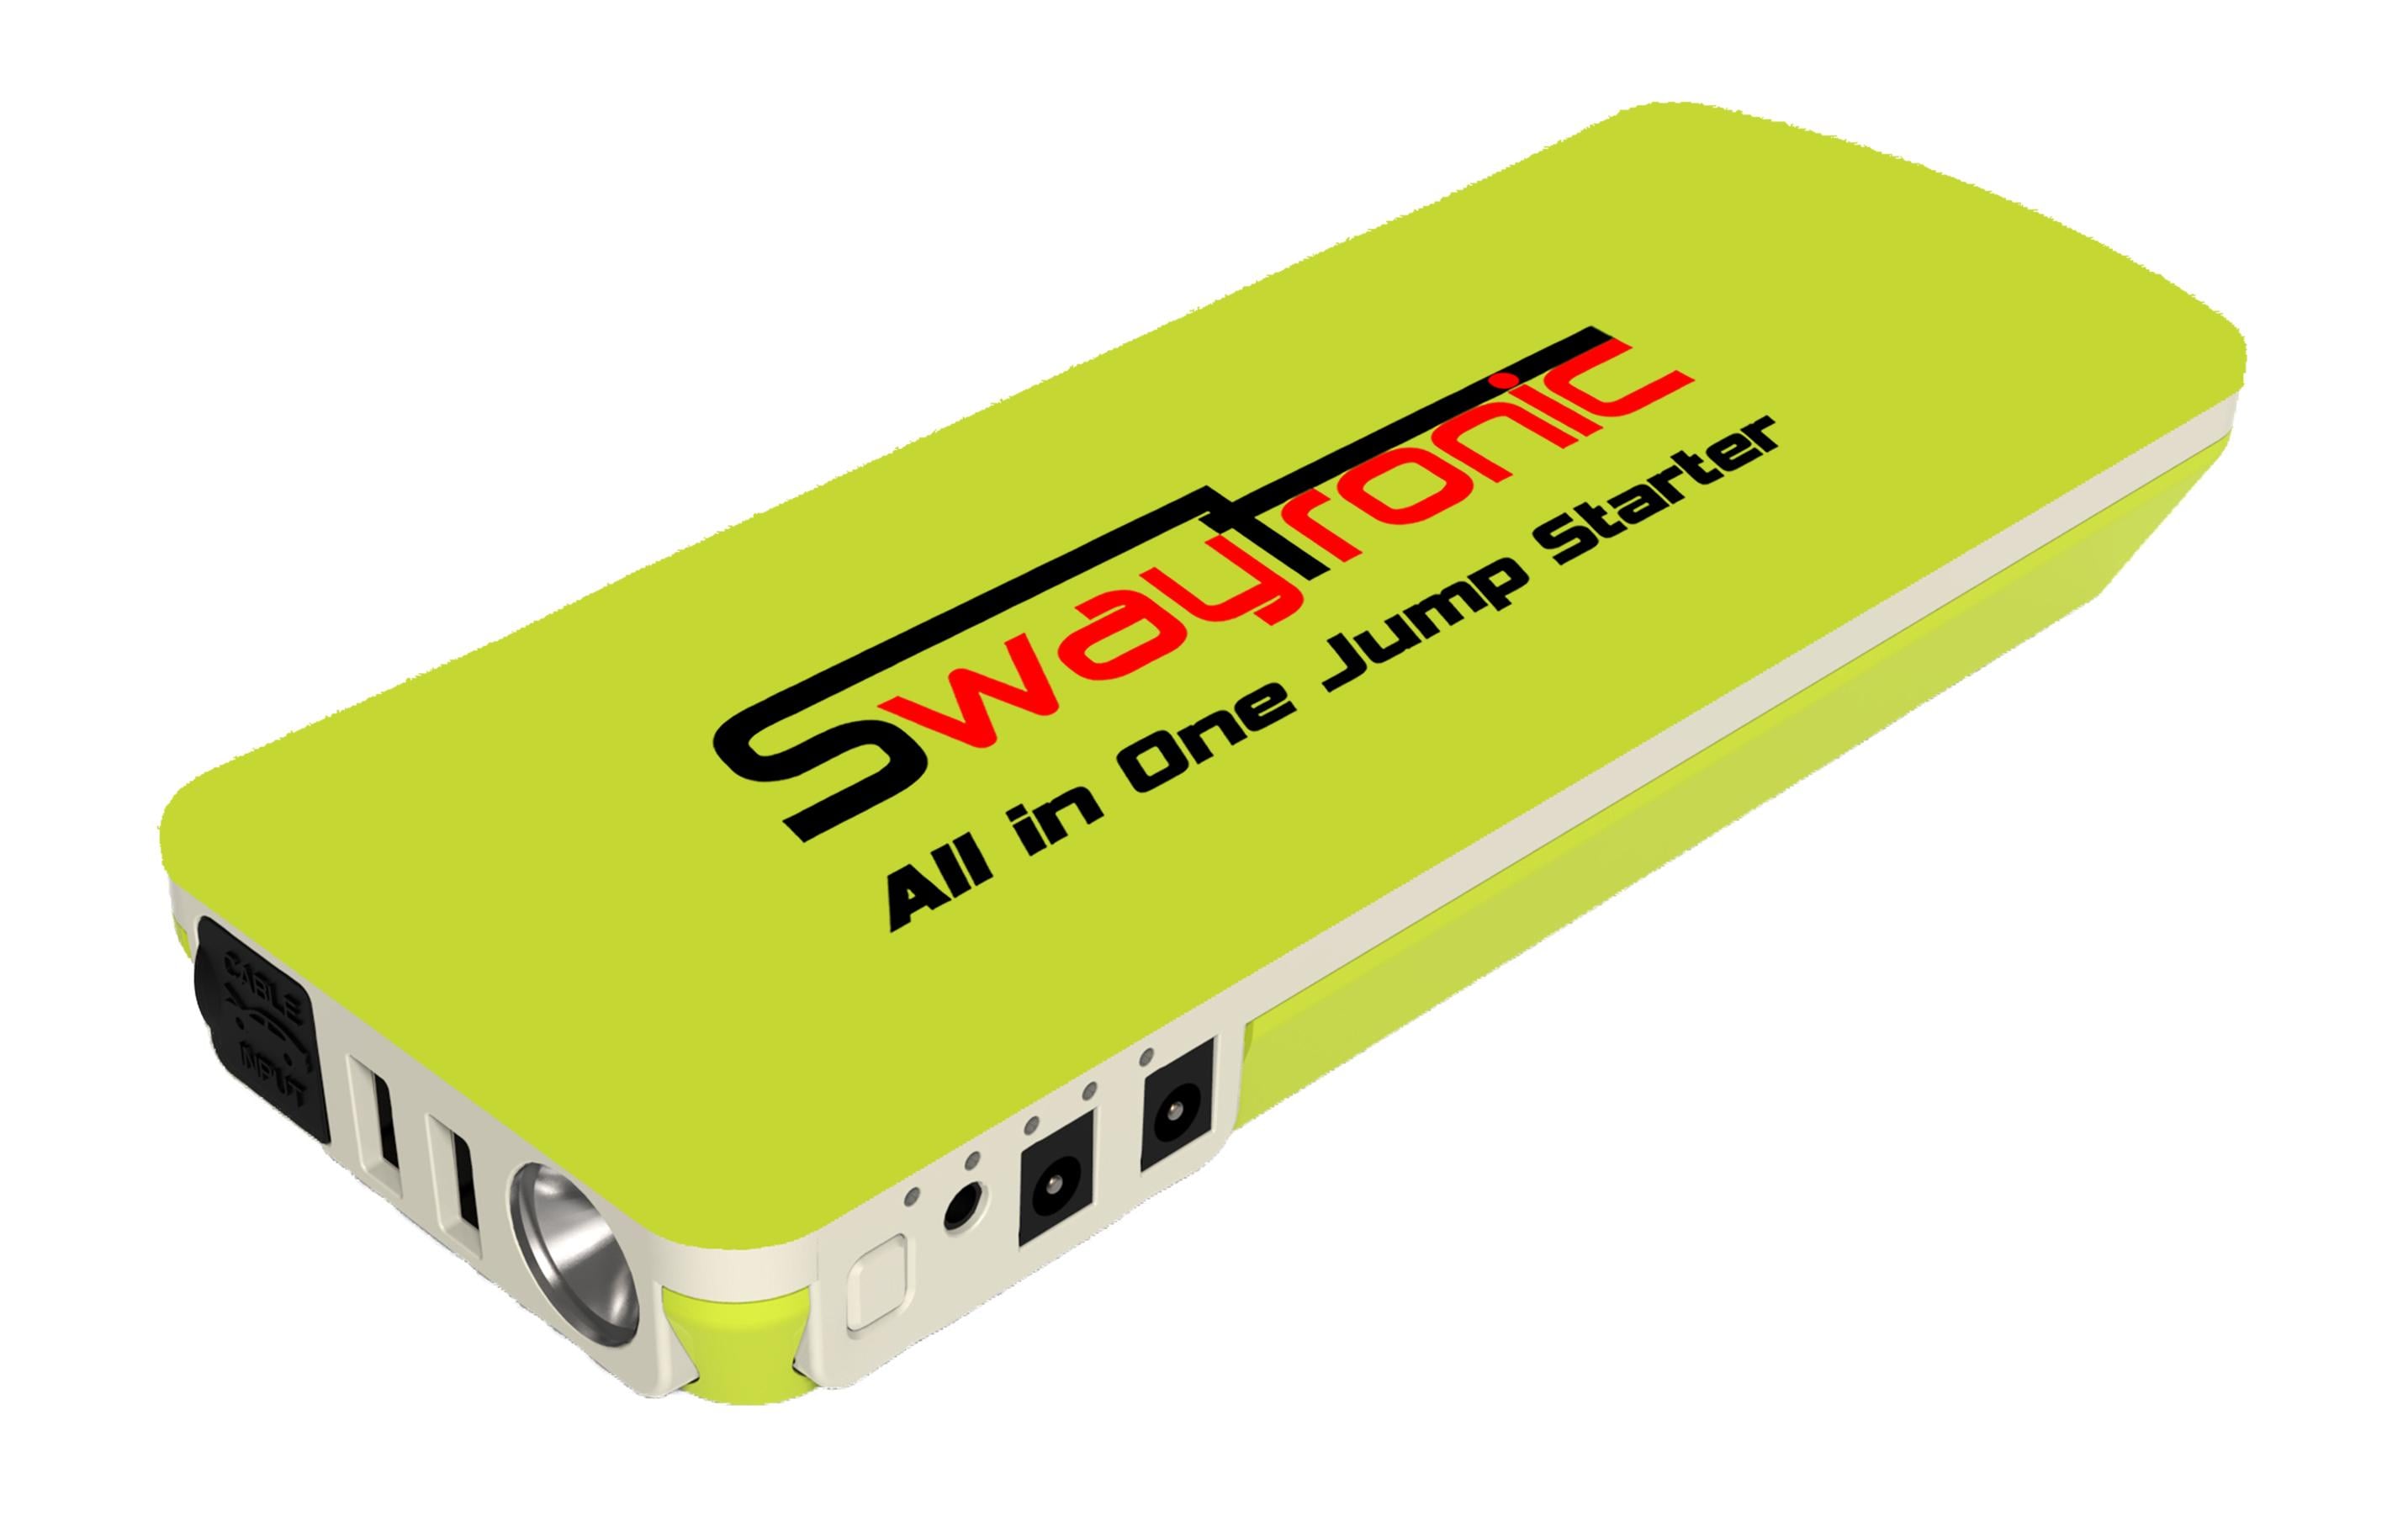 Swaytronic Starterbatterie All in One Jump Starter 2.0